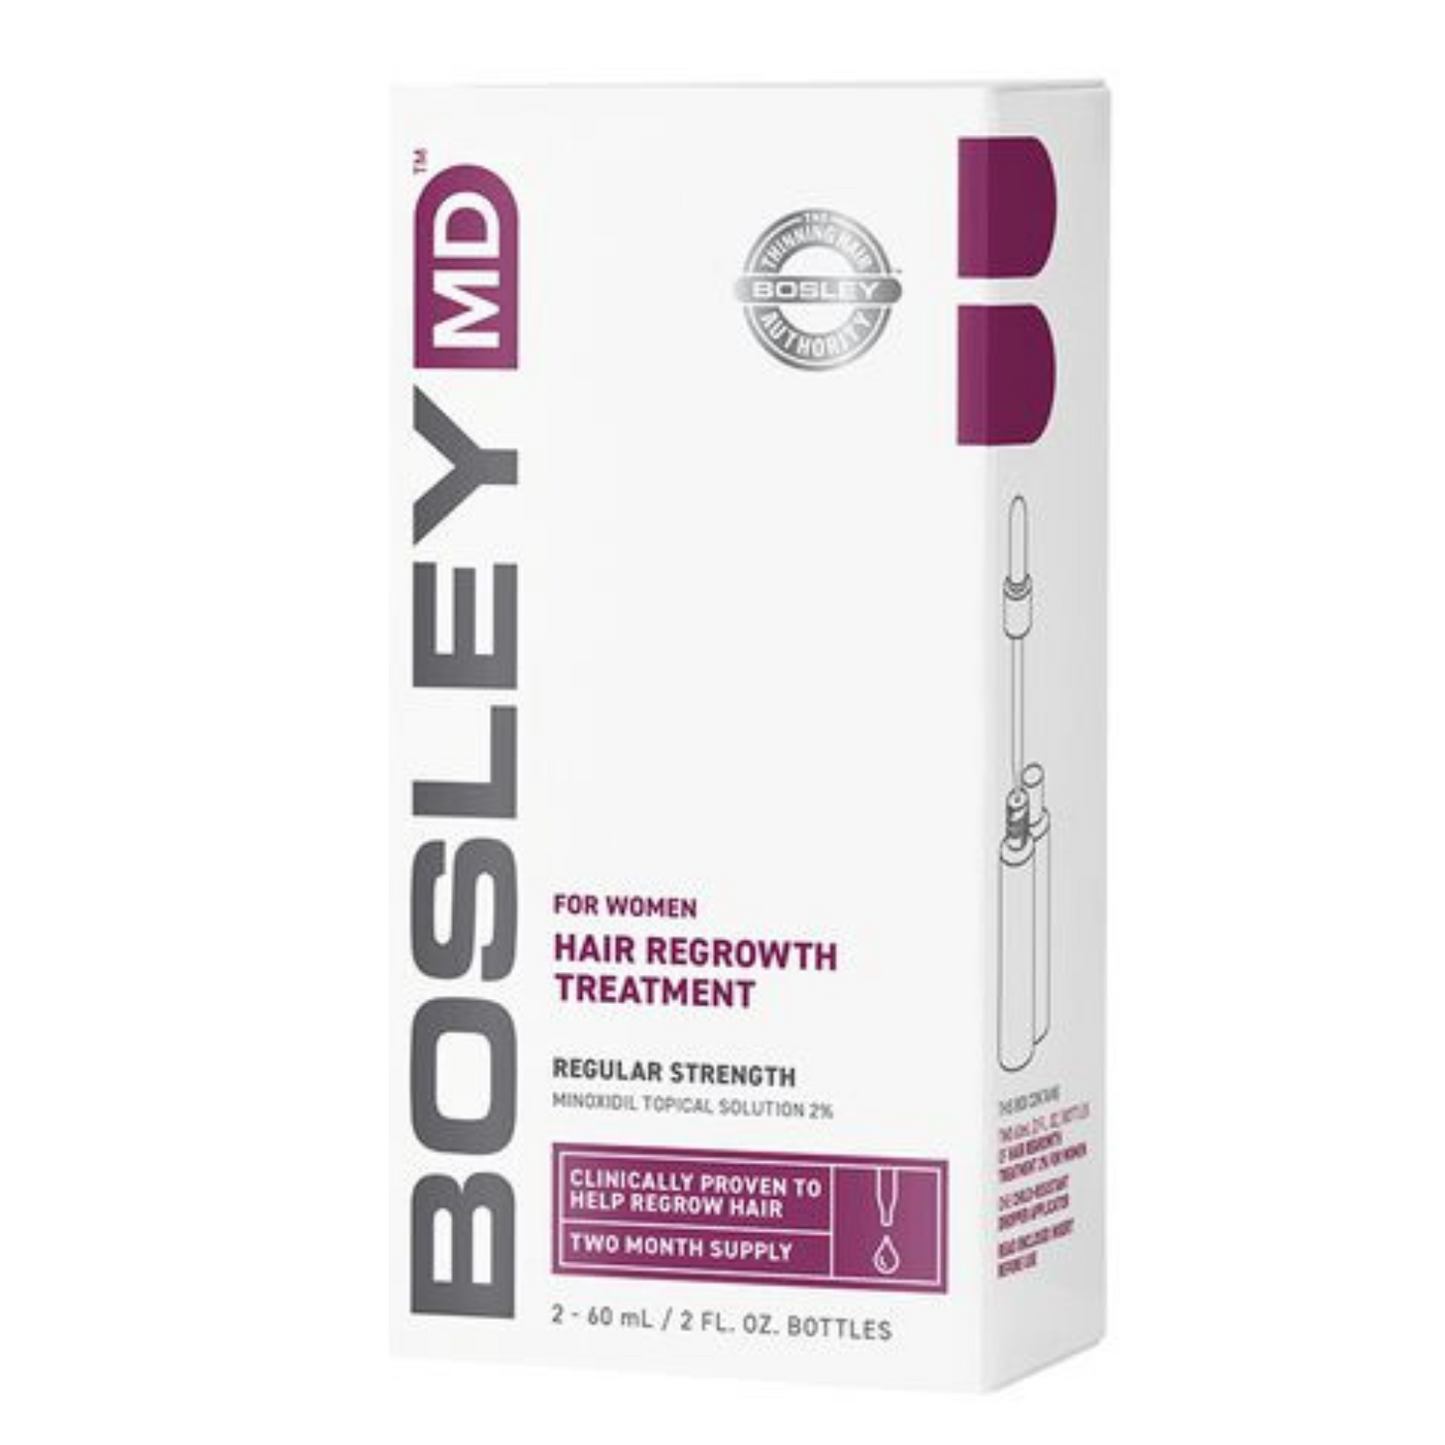 BosleyMD - Women's Hair Re-growth Treatment 2% Dropper